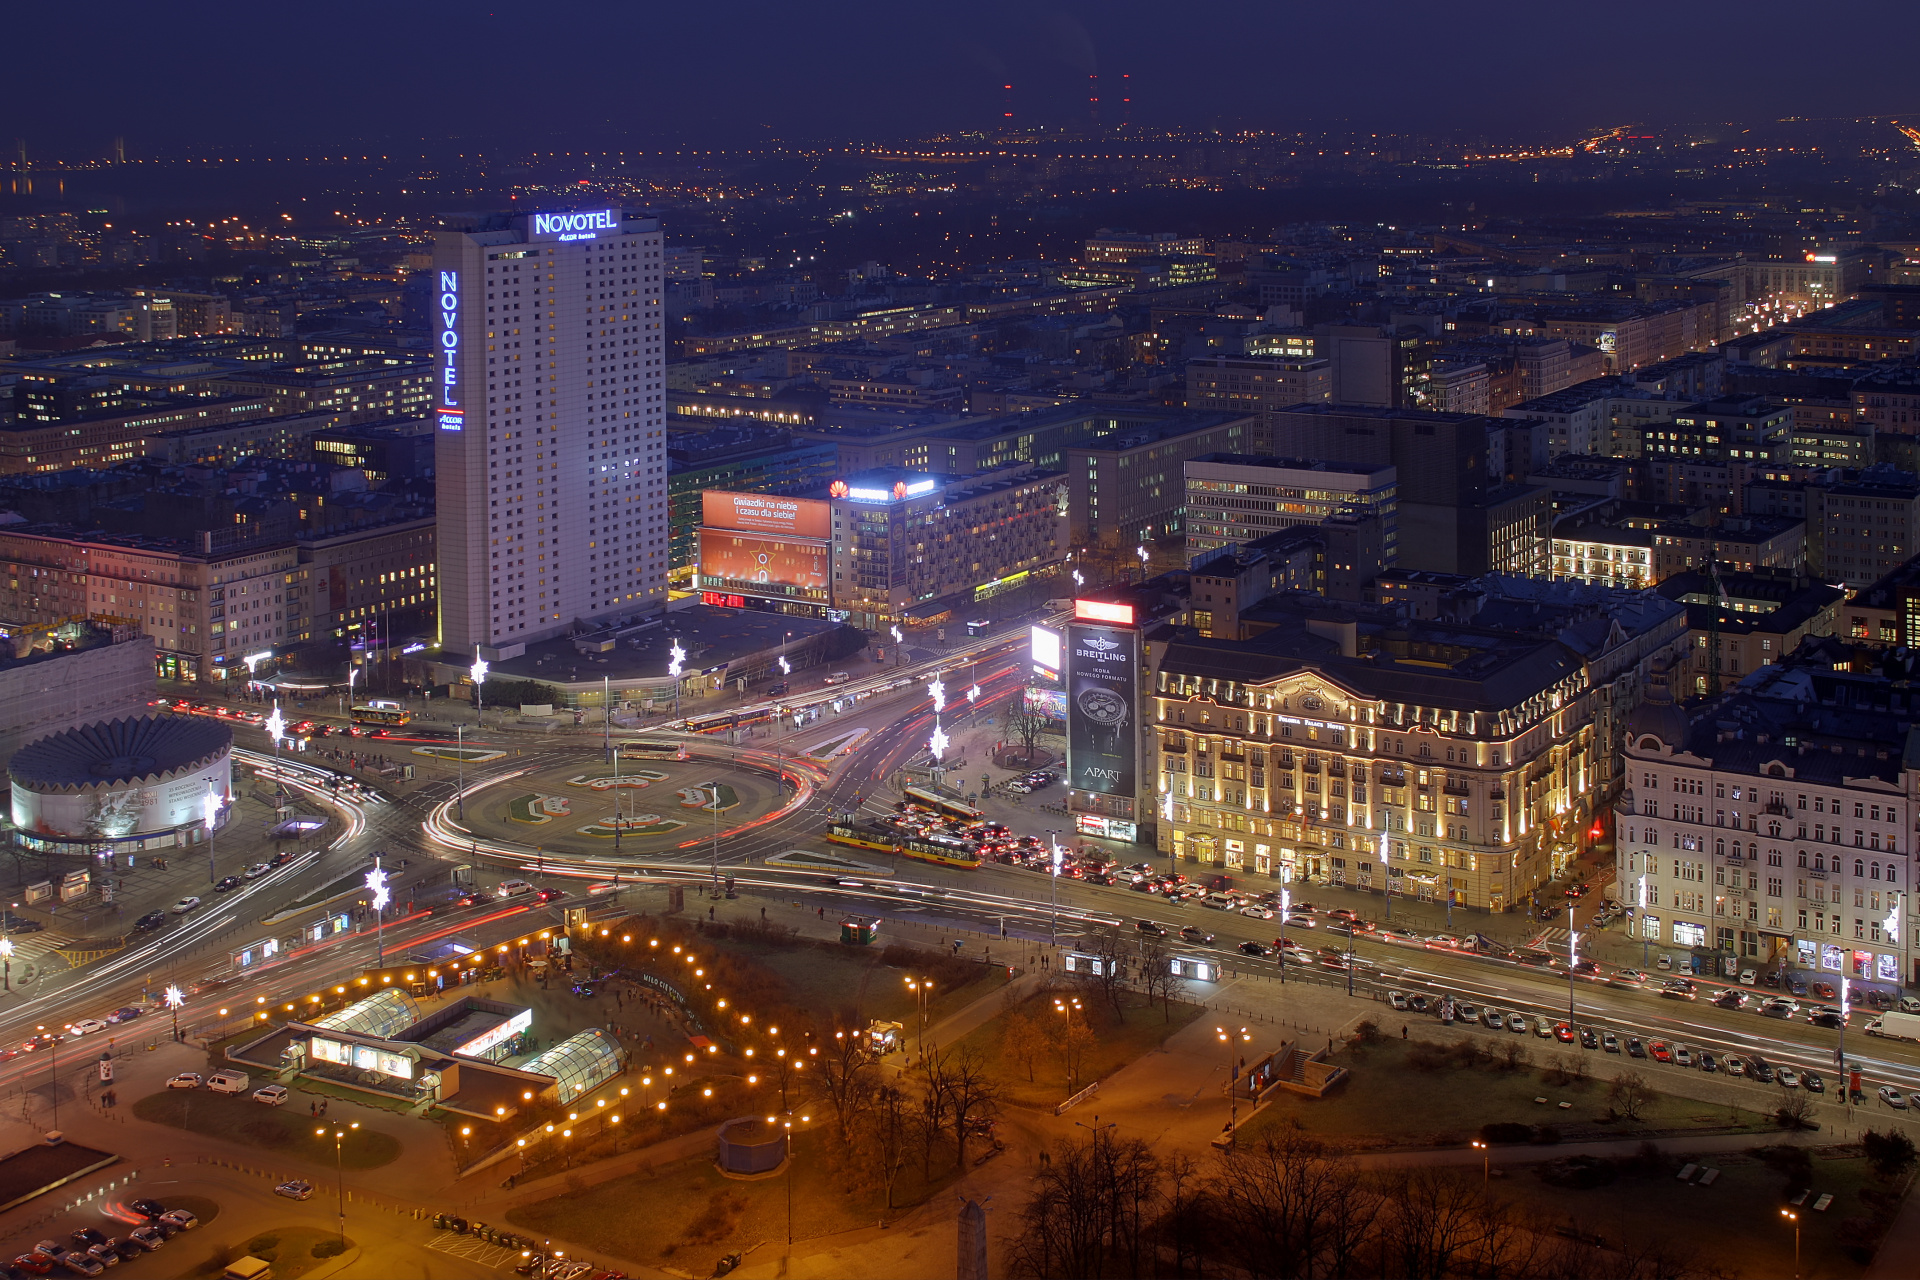 Rotunda, Rondo Dmowskiego, Novotel, Polonia Hotel, MDM and Solec (Warsaw » Warsaw from Above)